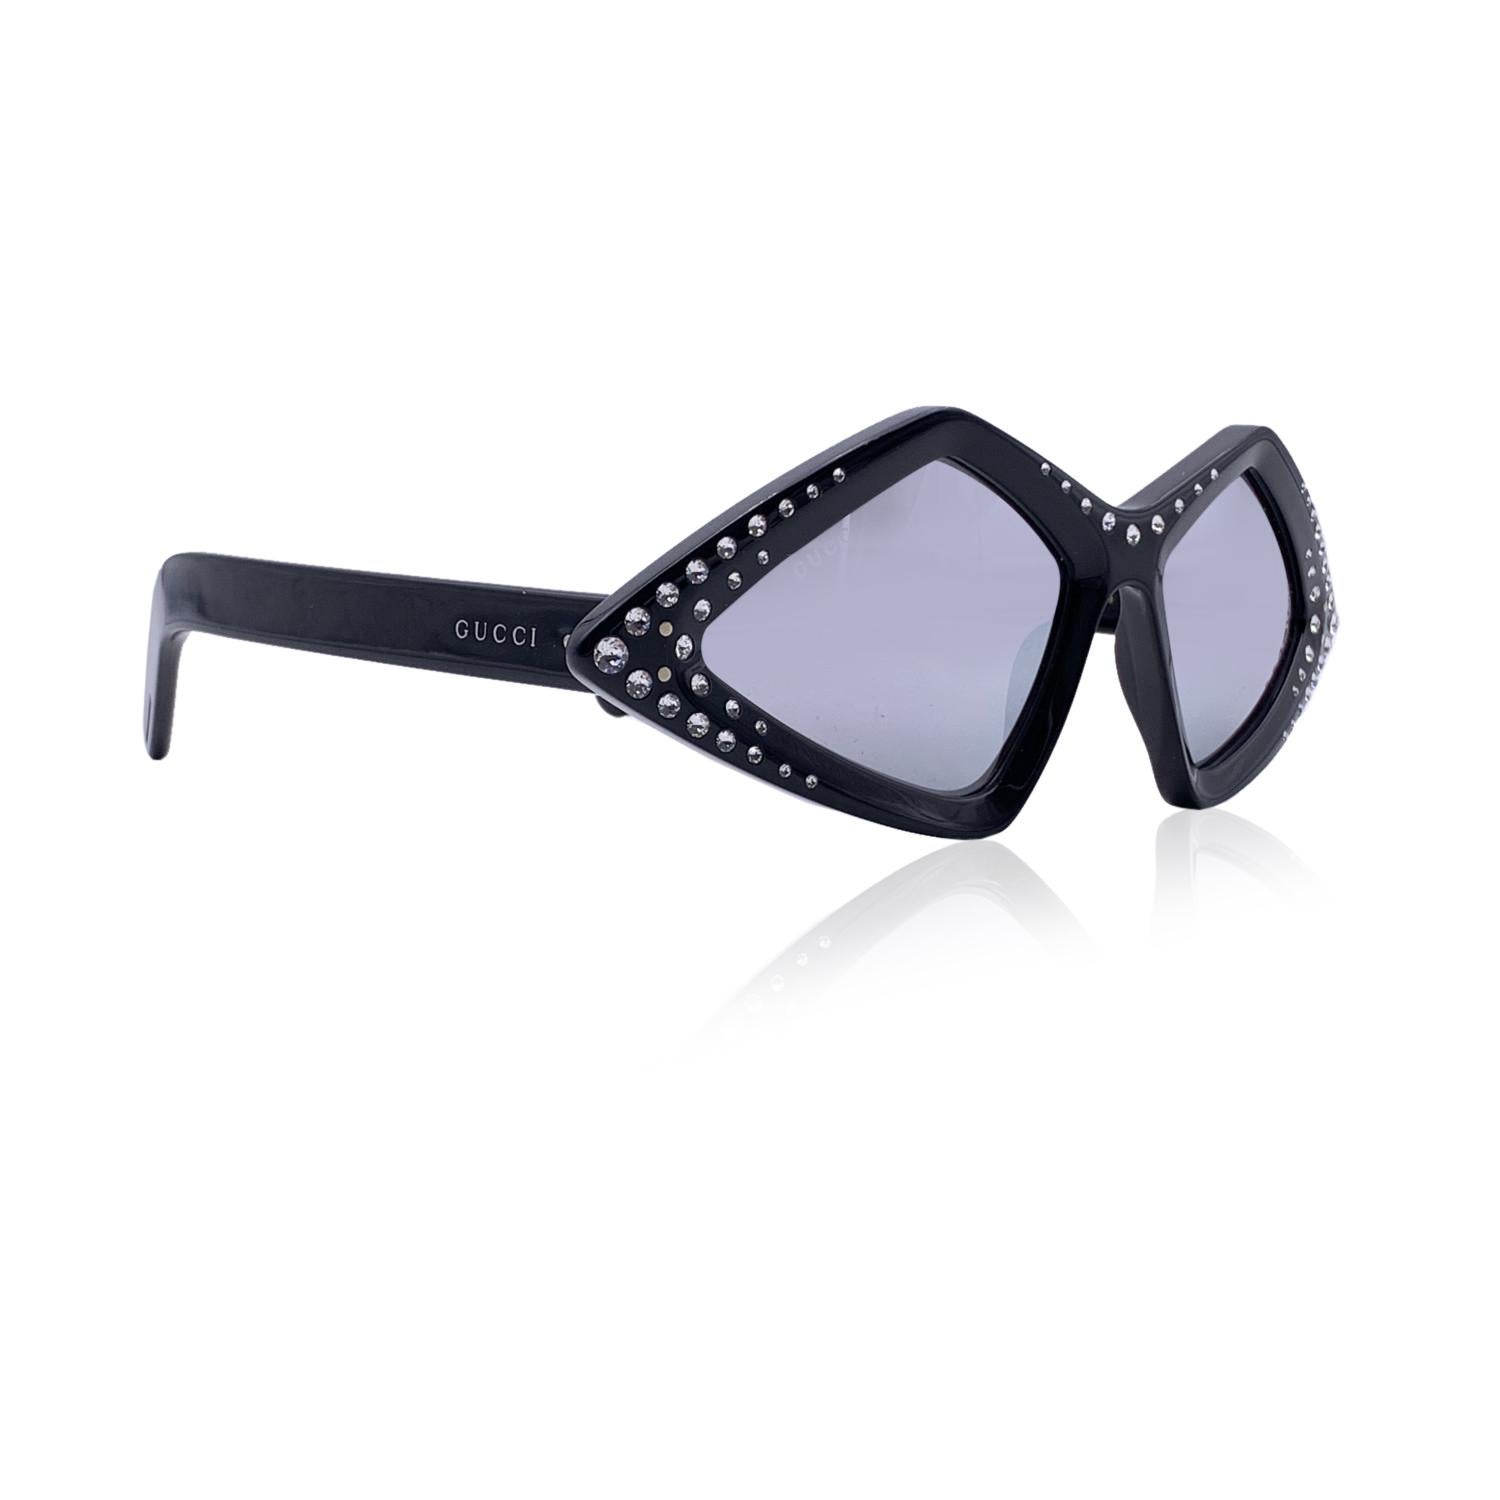 black-acetate sunglasses with signature silver-tone detail